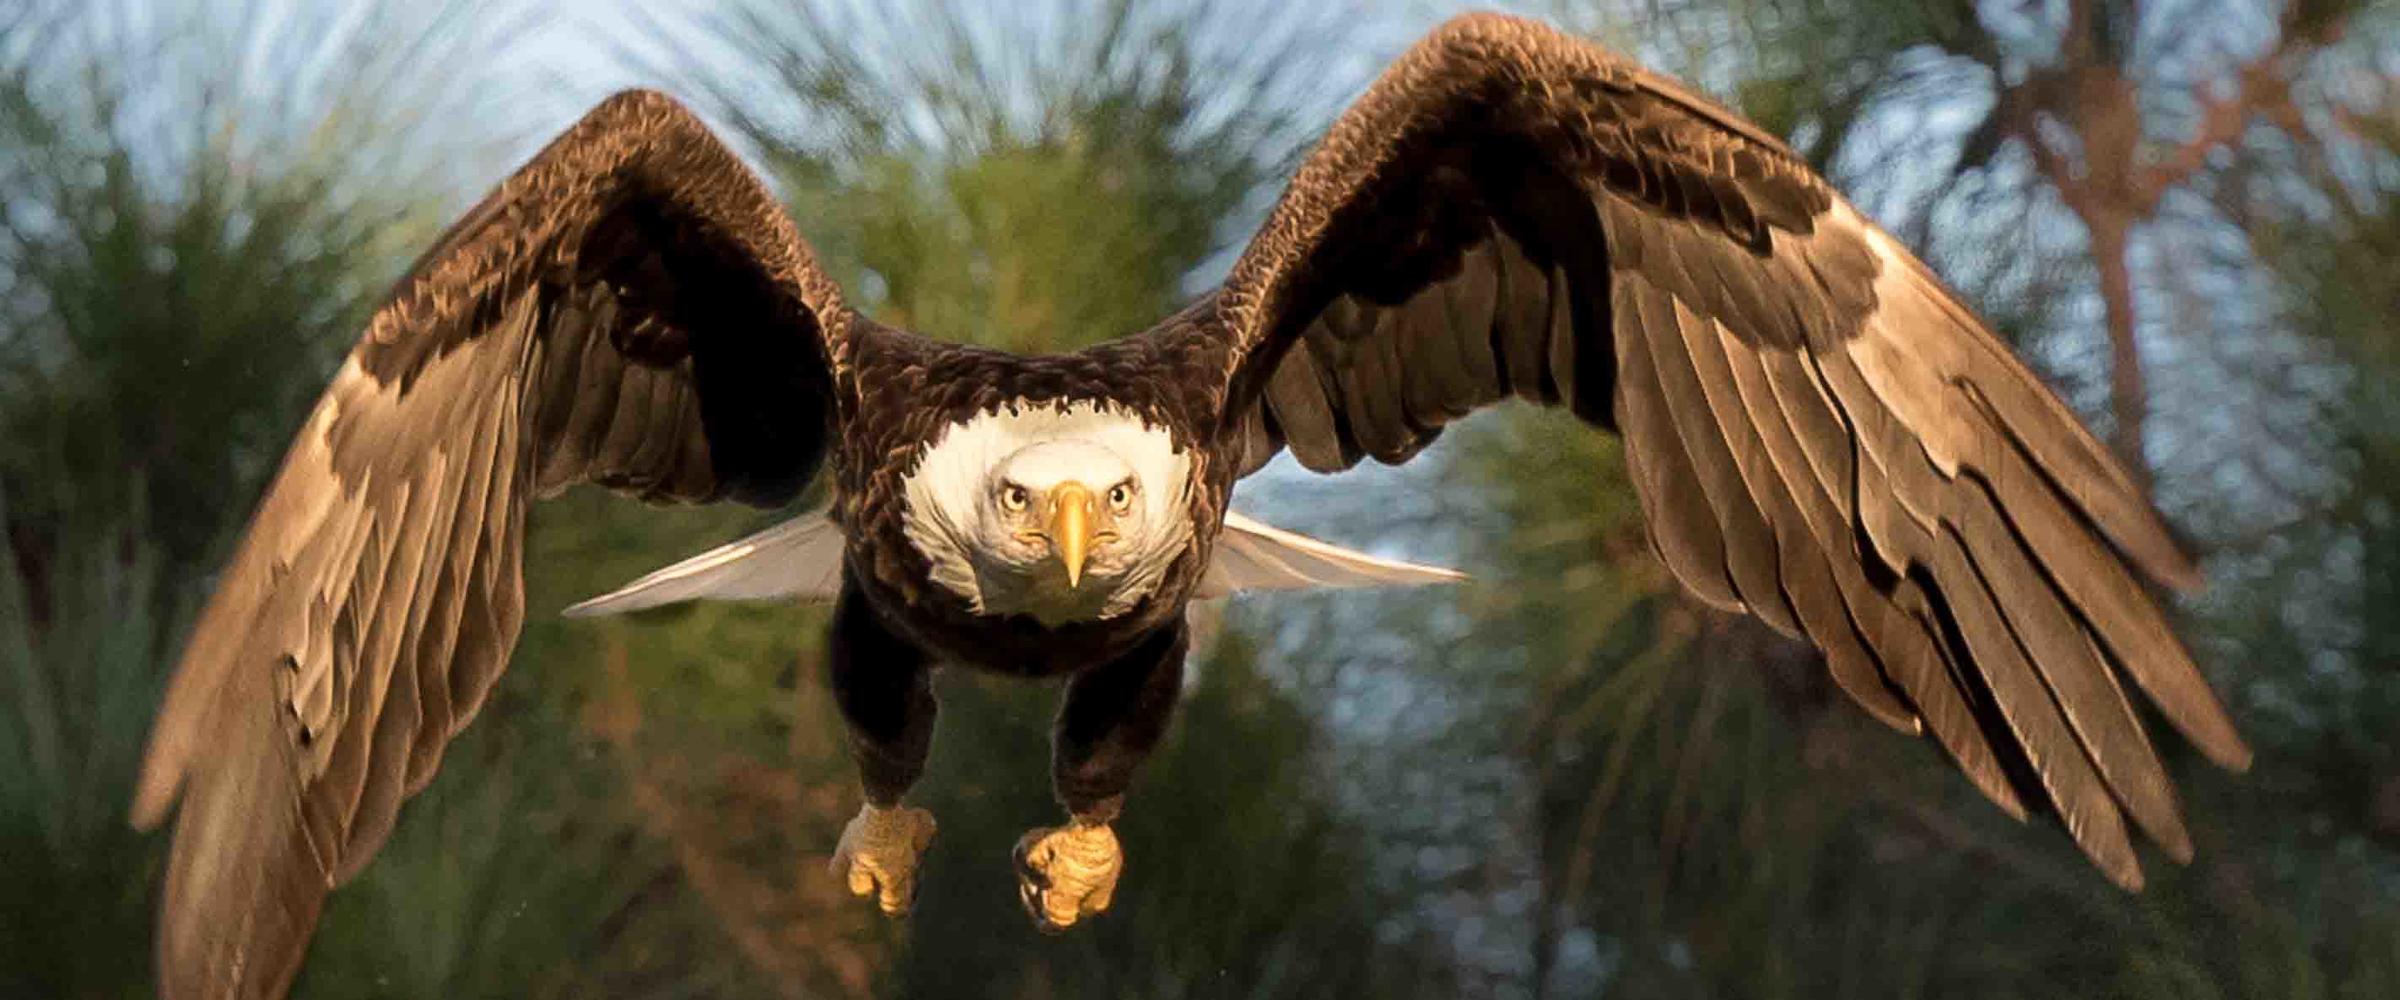 bald eagle taking flight